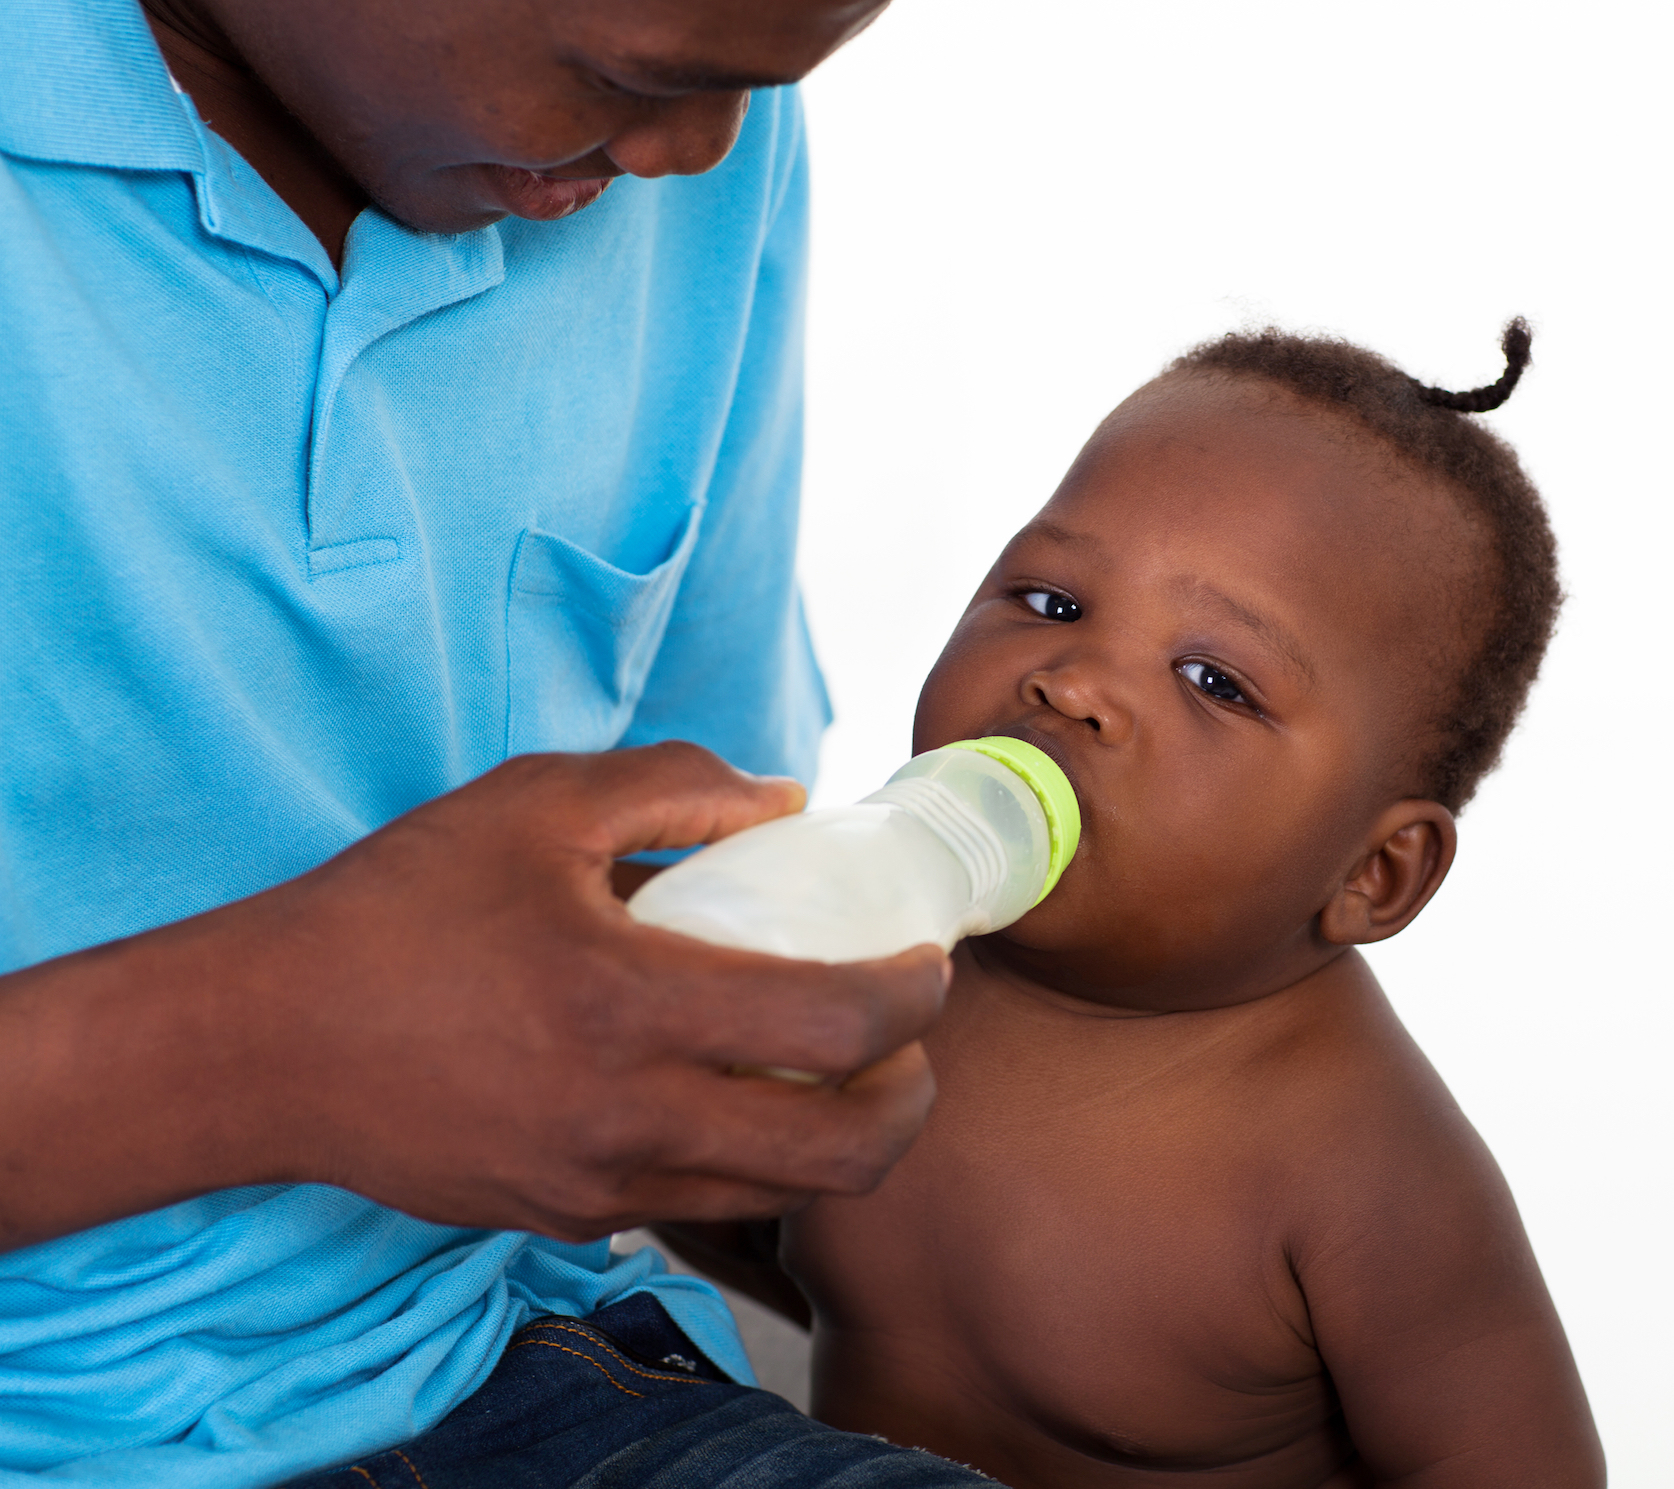 Baby sucking skills and obesity on successful black parenting magazine